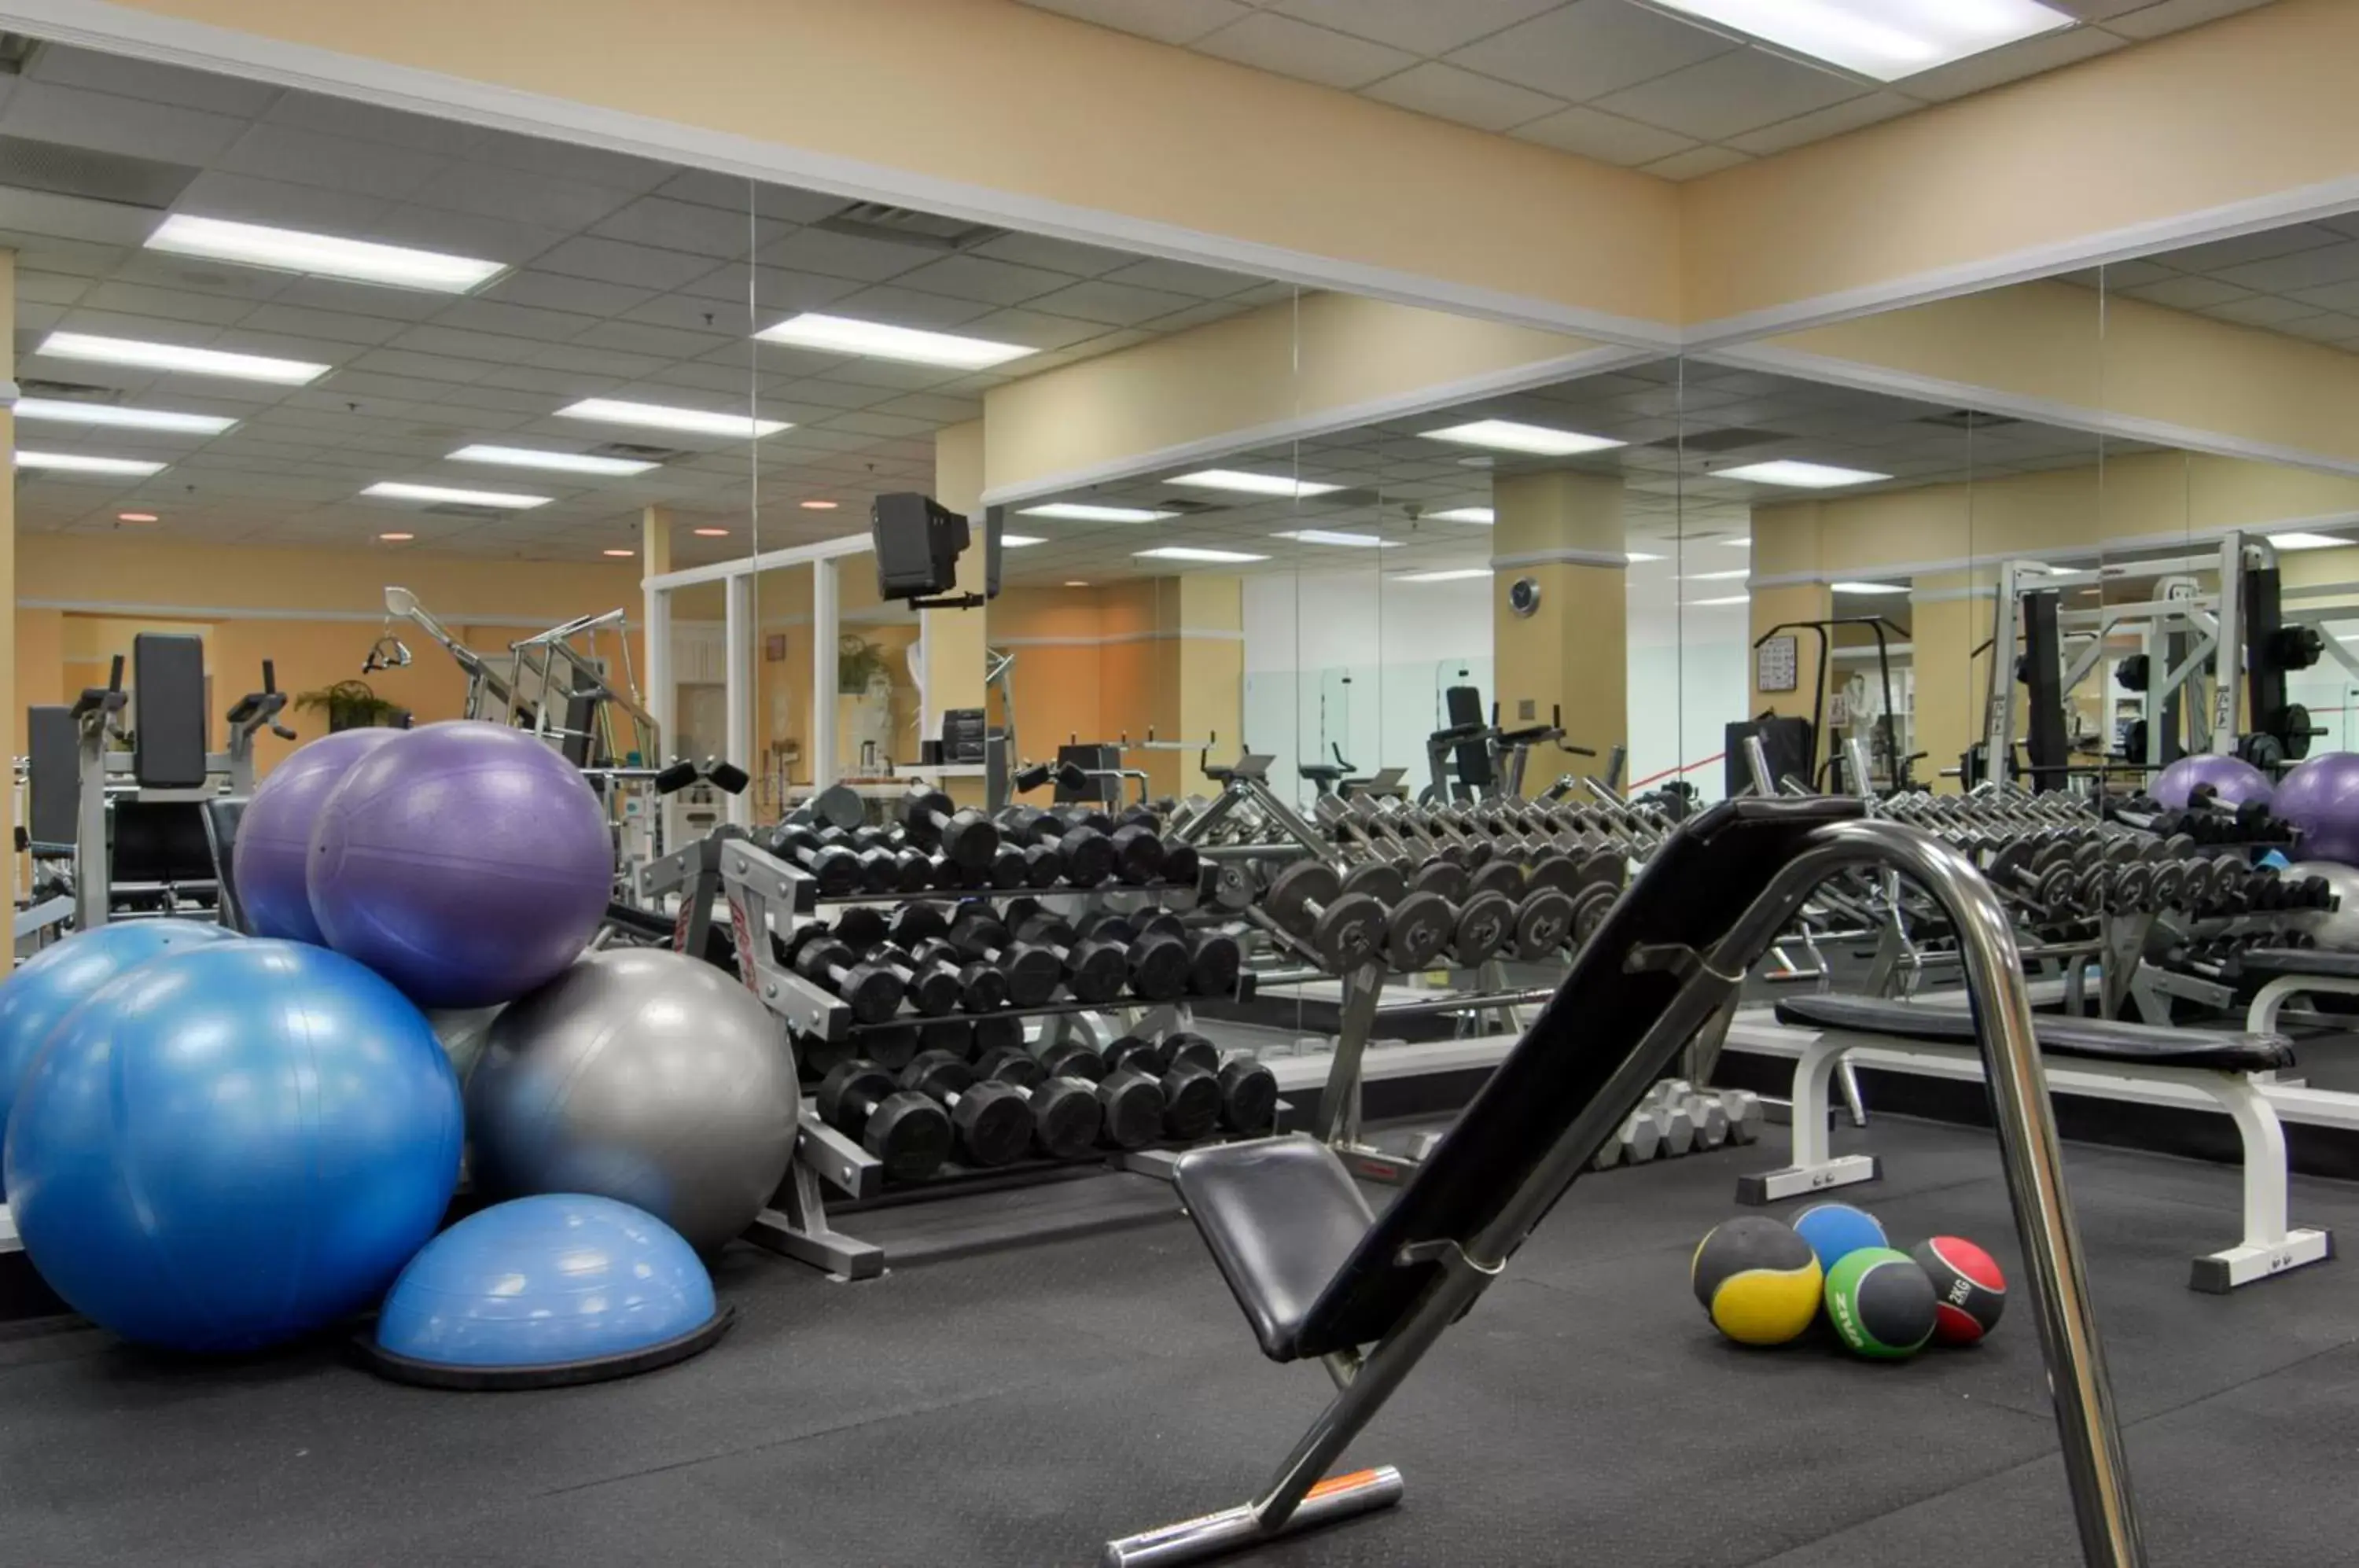 Fitness centre/facilities, Fitness Center/Facilities in Fairmont Hotel Macdonald